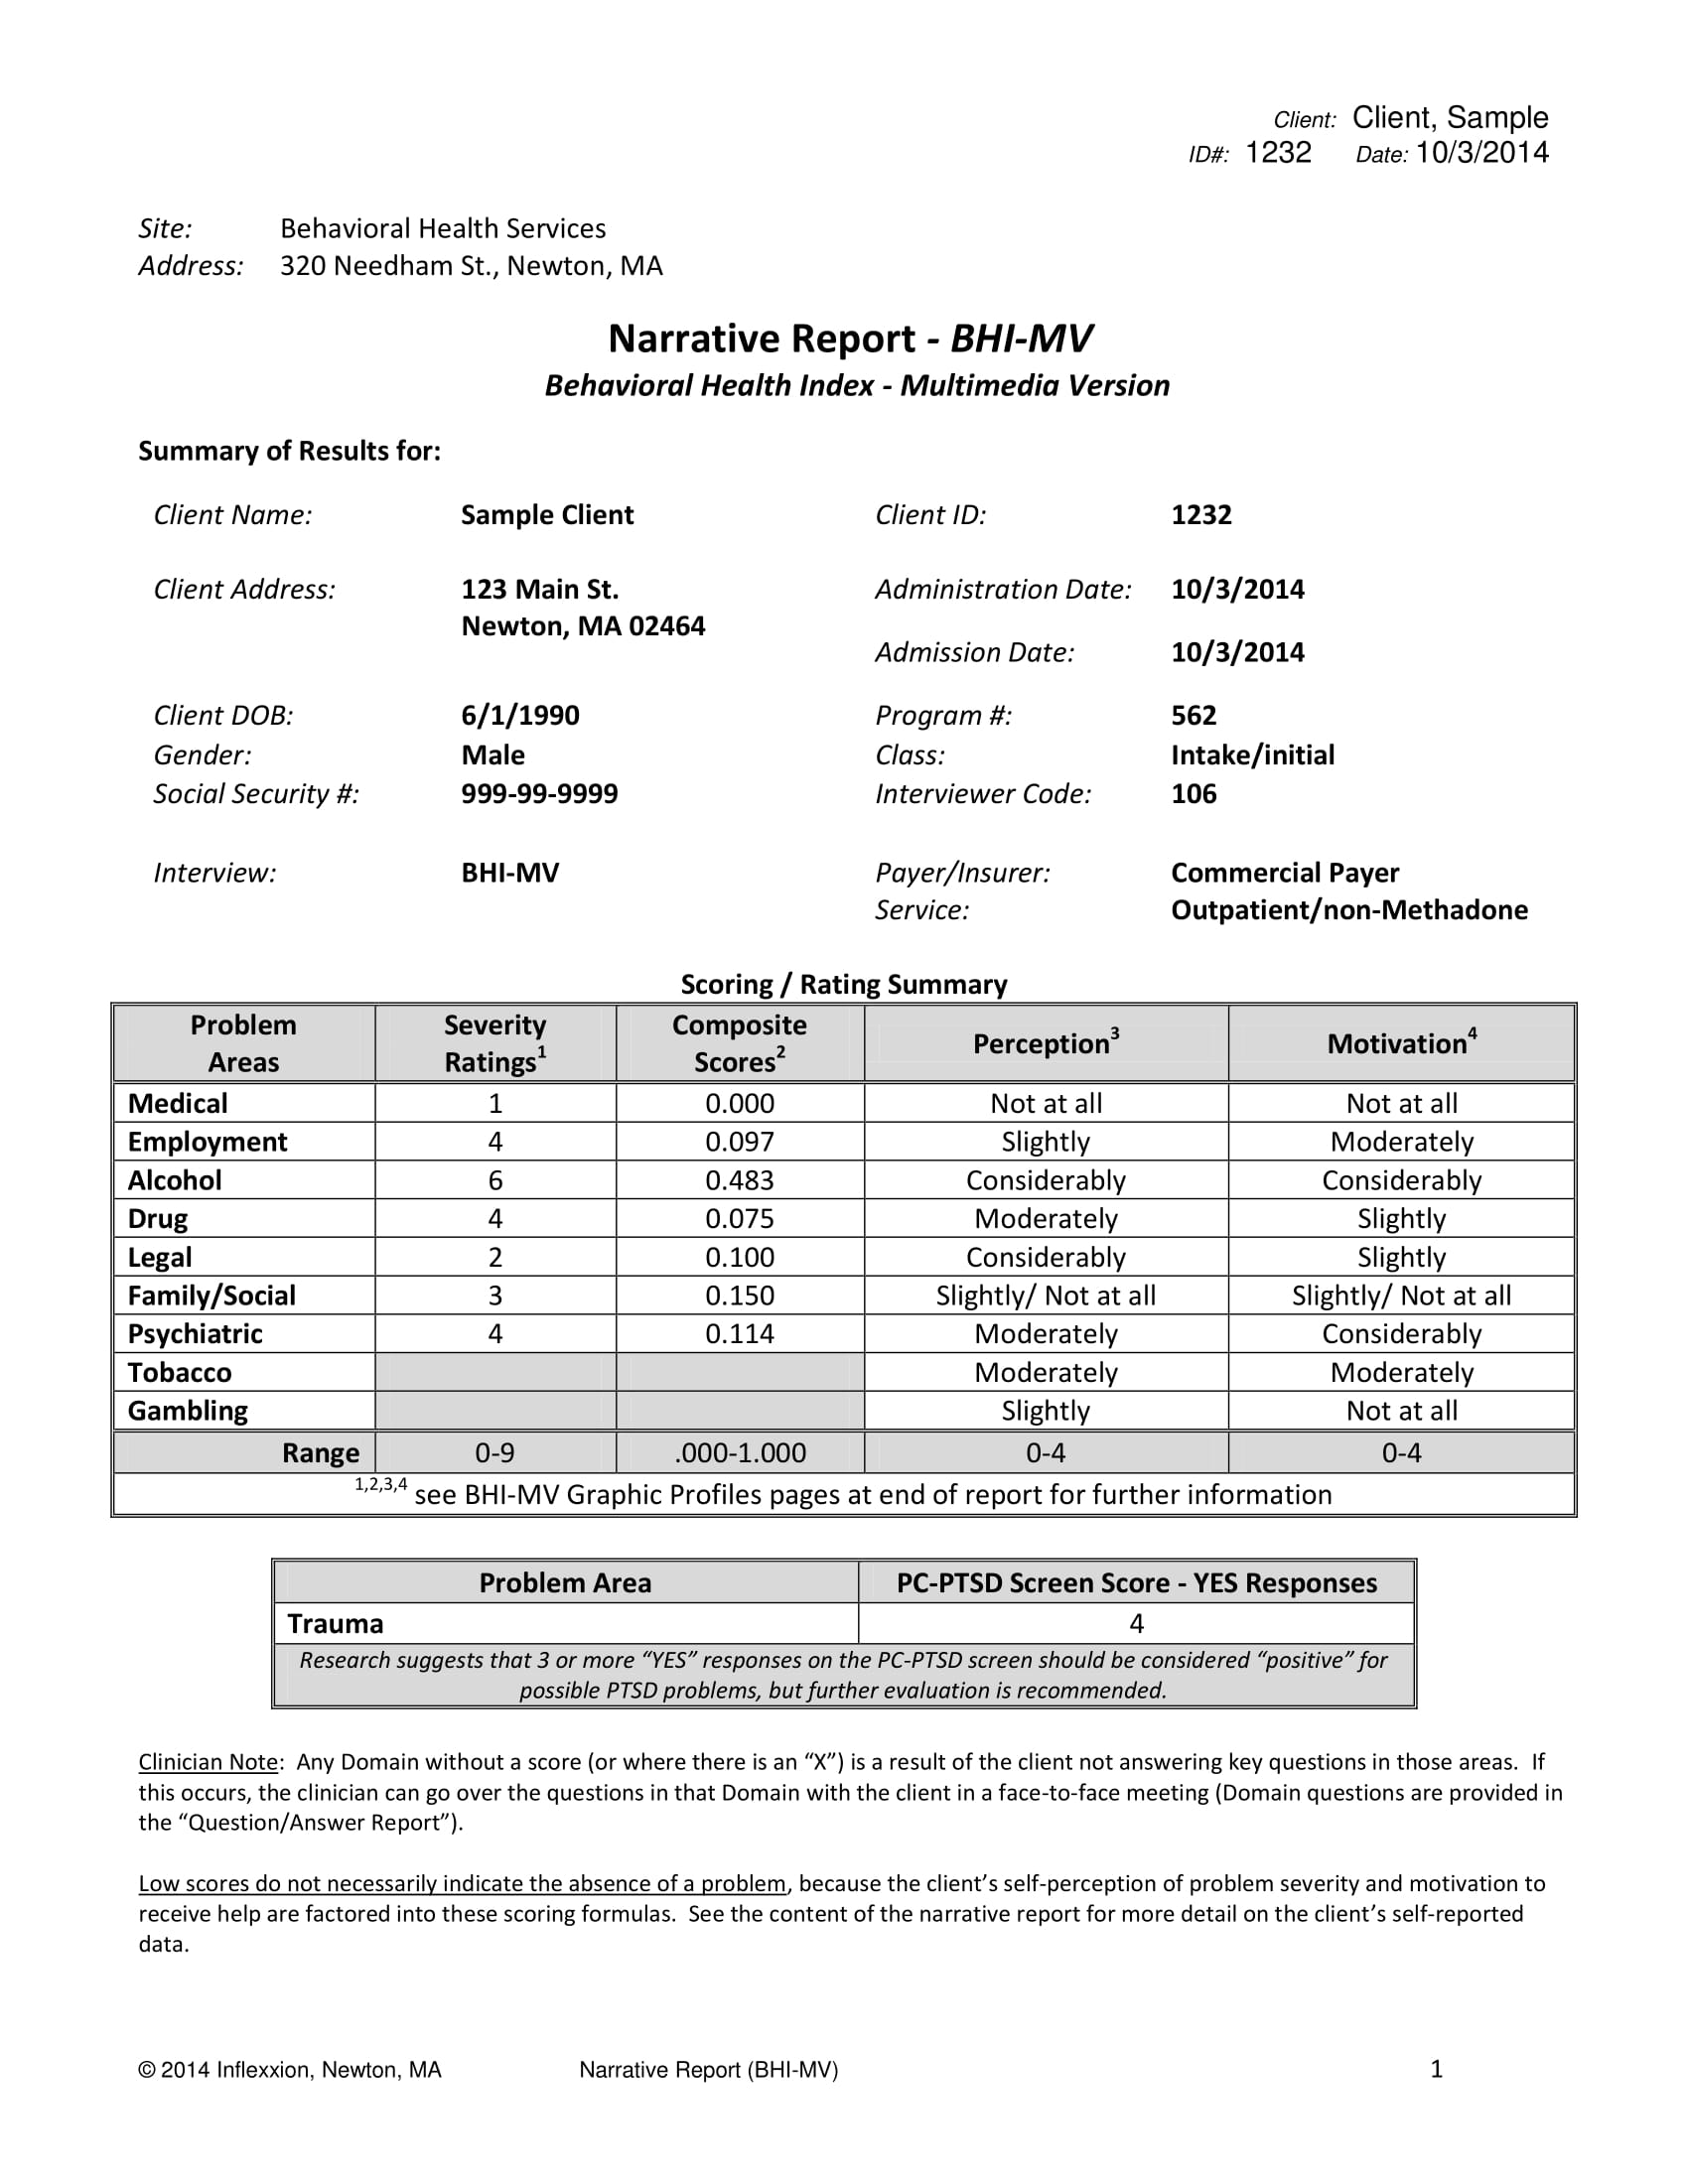 behavioral health index multimedia version narrative report example